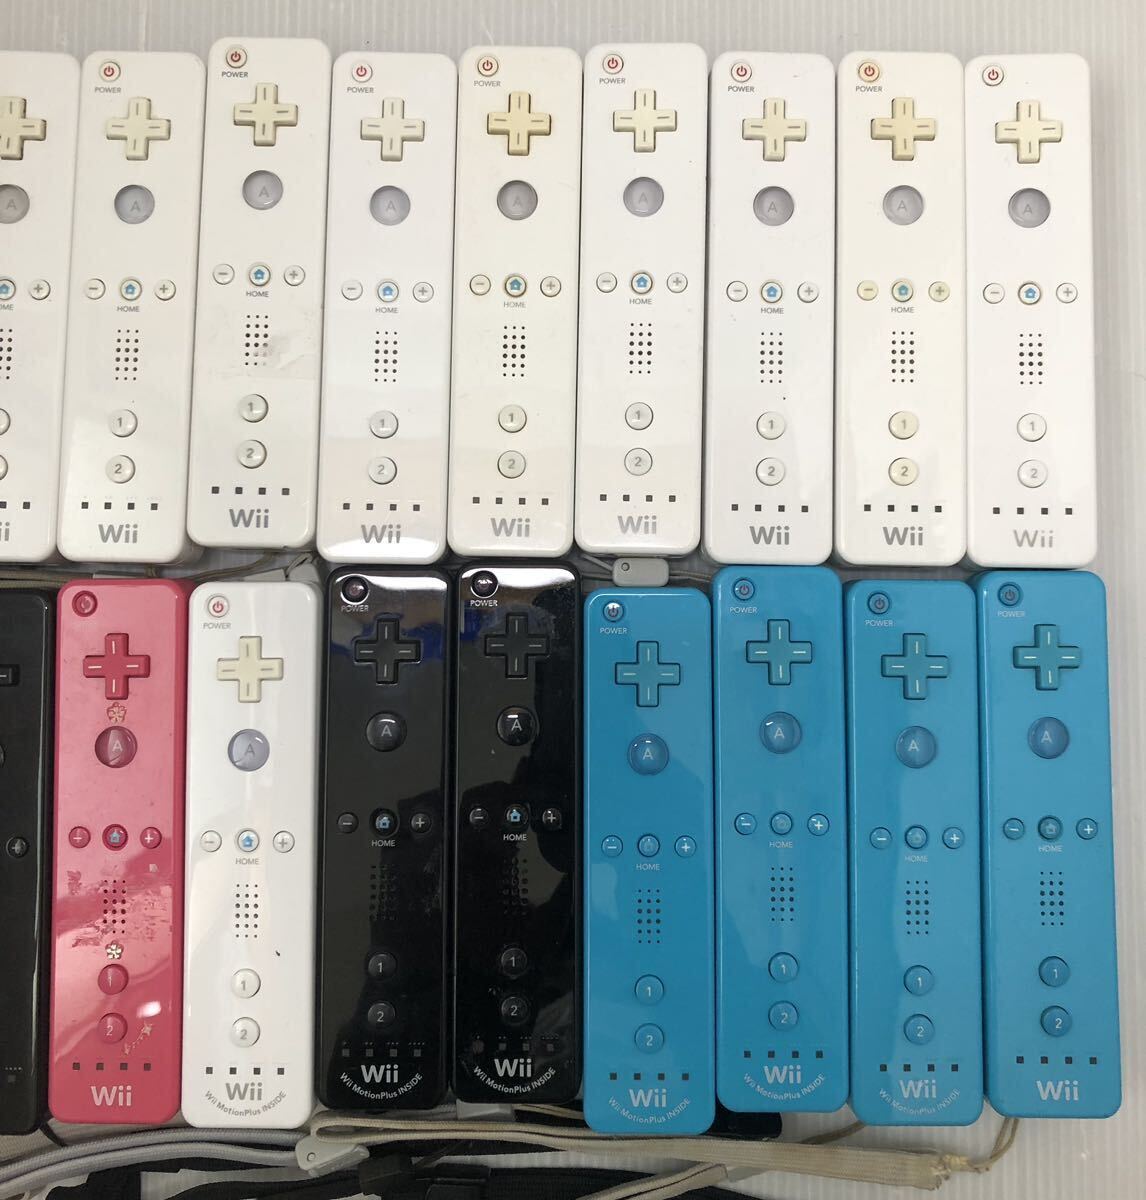  nintendo Wii remote control 30 pcs nn tea k4 pcs silicon jacket charge board large amount summarize operation not yet verification Junk Nintendo we Wii U